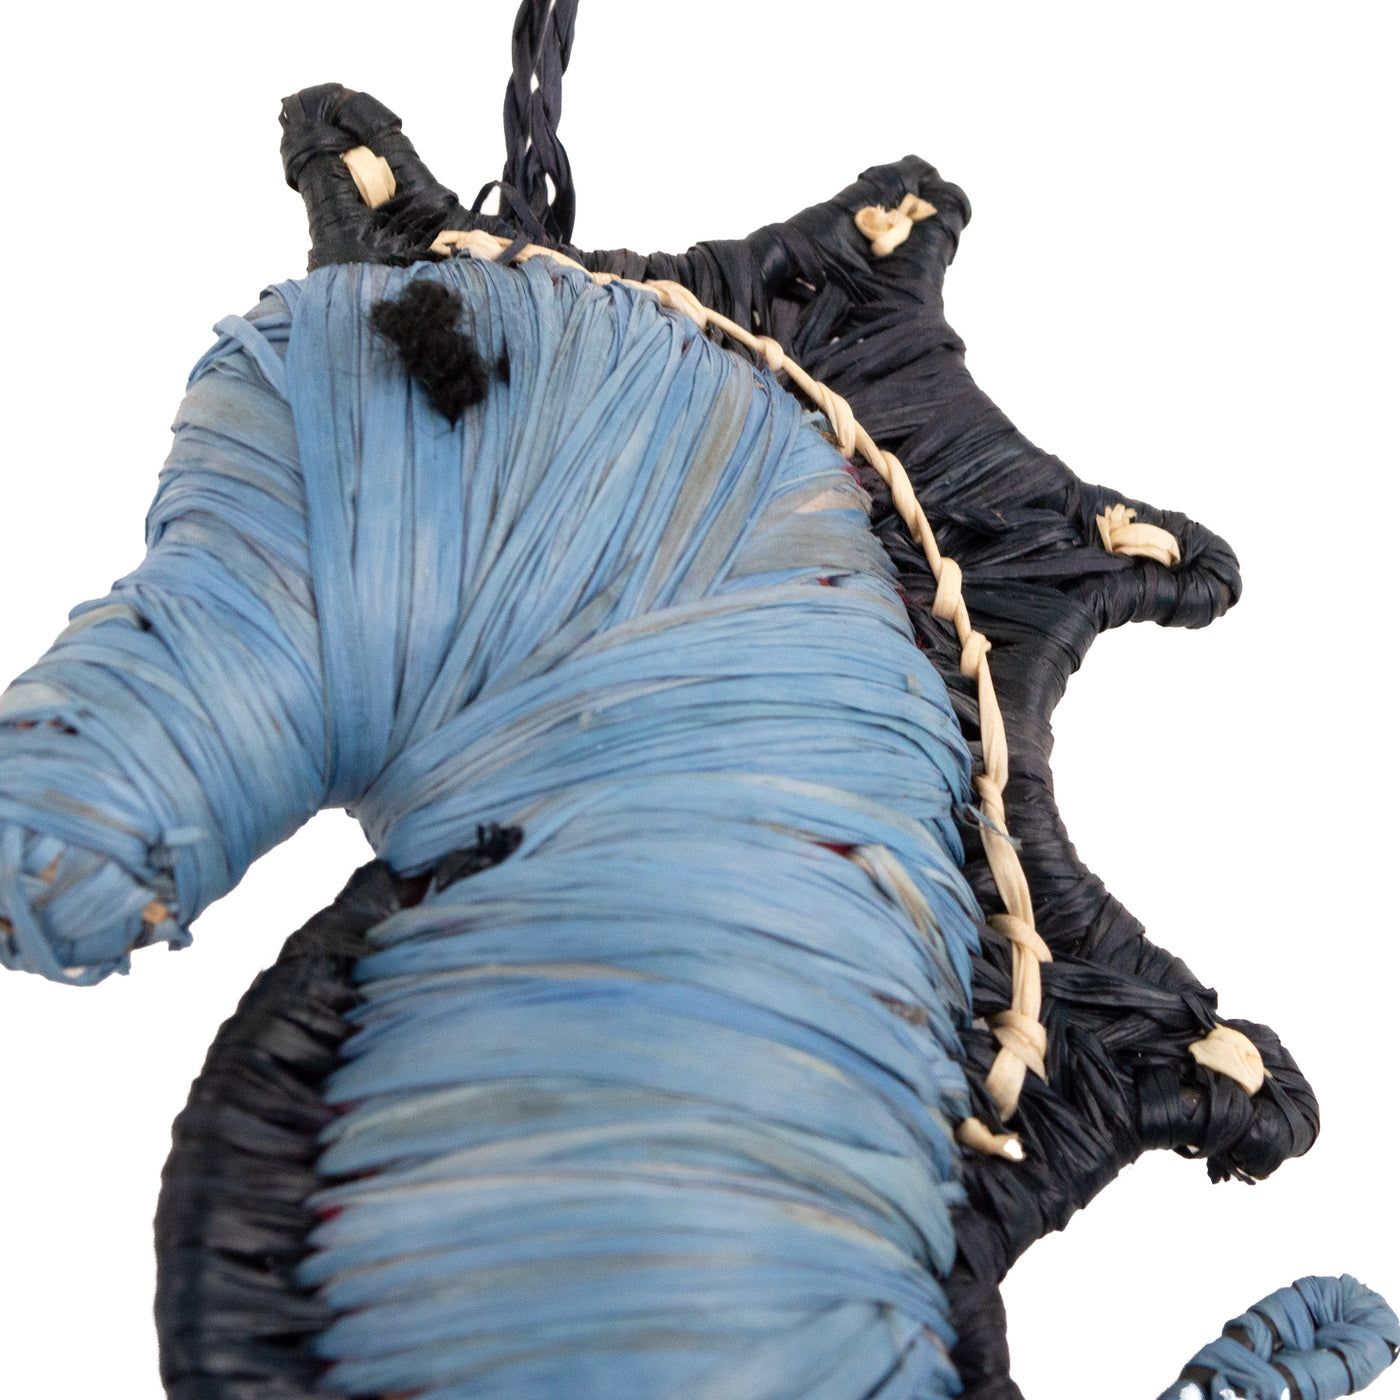 Coastal Ornament - Blue Seahorse